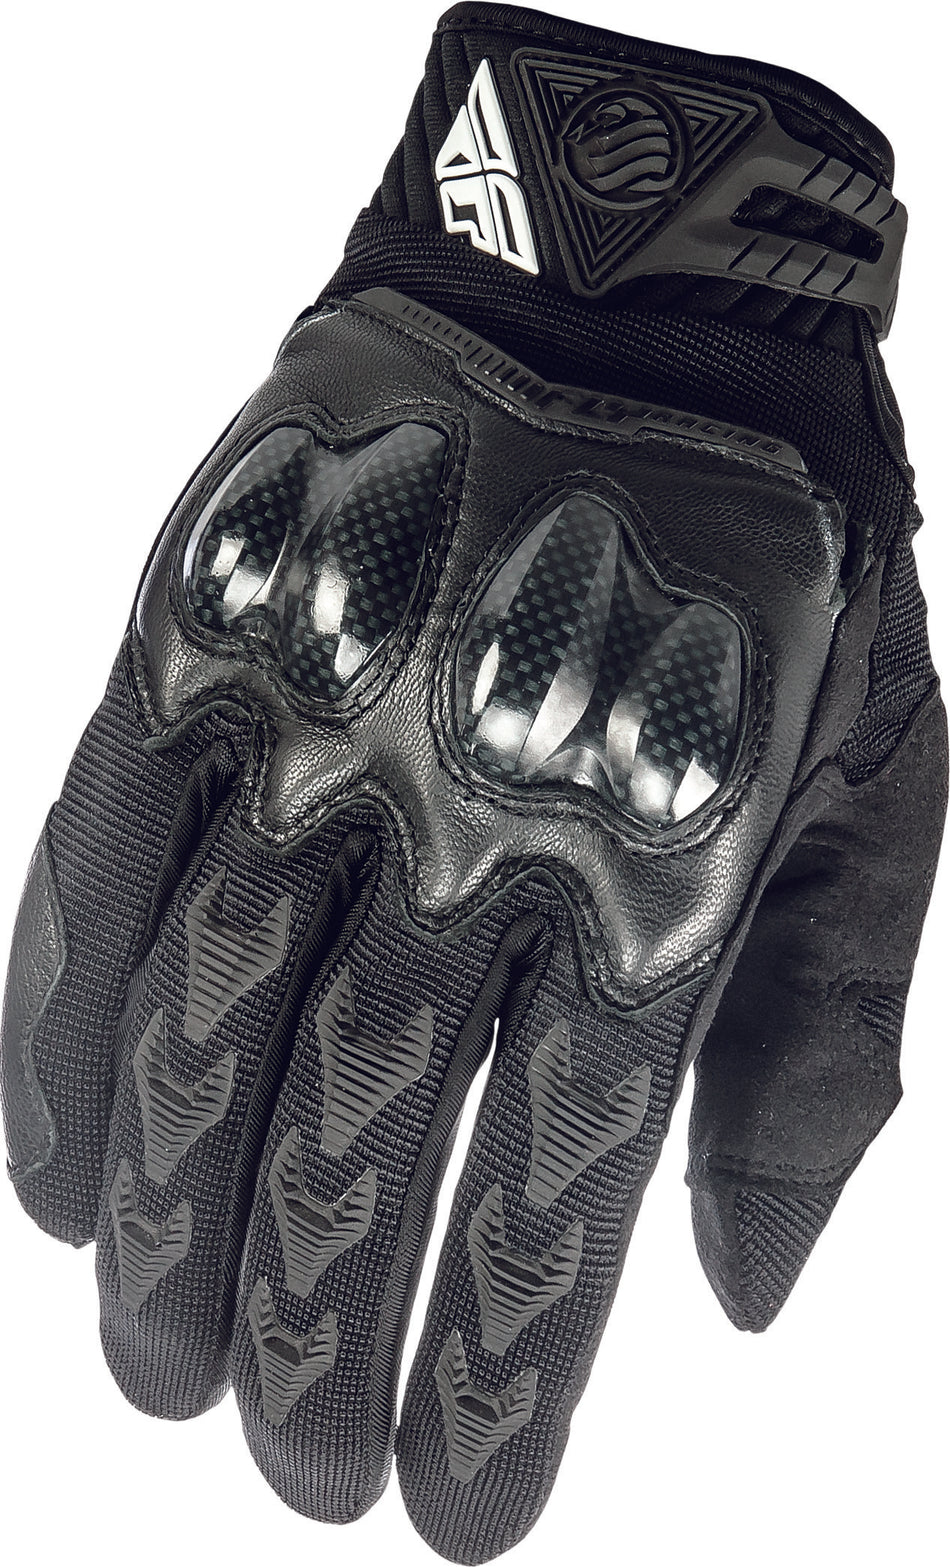 FLY RACING Patrol Xc Gloves Black Sz 10 369-06010